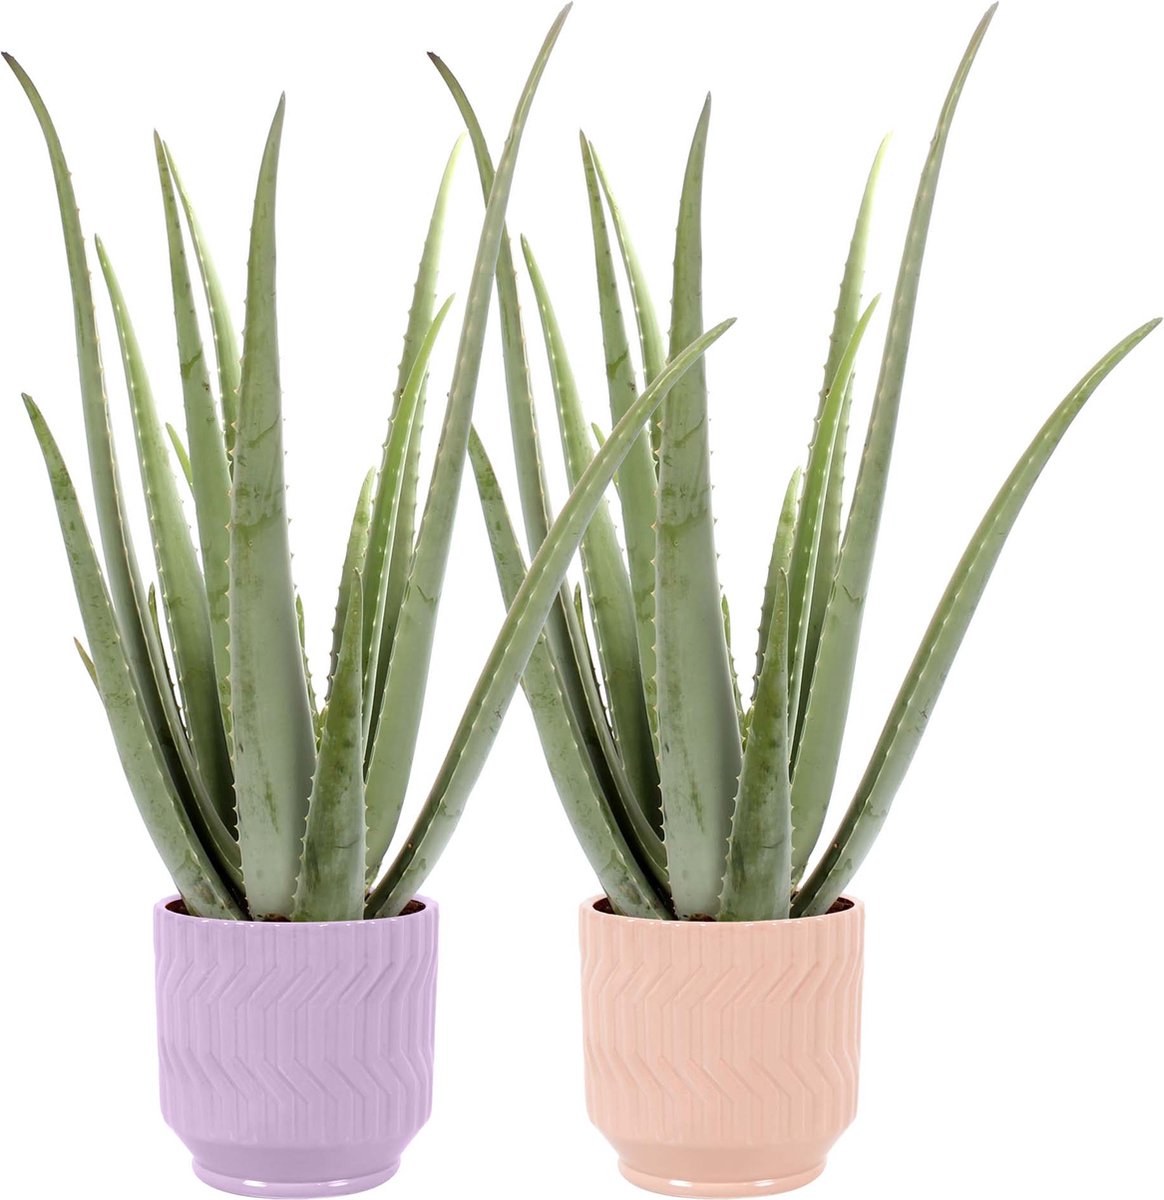 Duo Aloe Vera in Jane keramiek (Purple en Orange) ↨ 35cm - 2 stuks - hoge kwaliteit planten